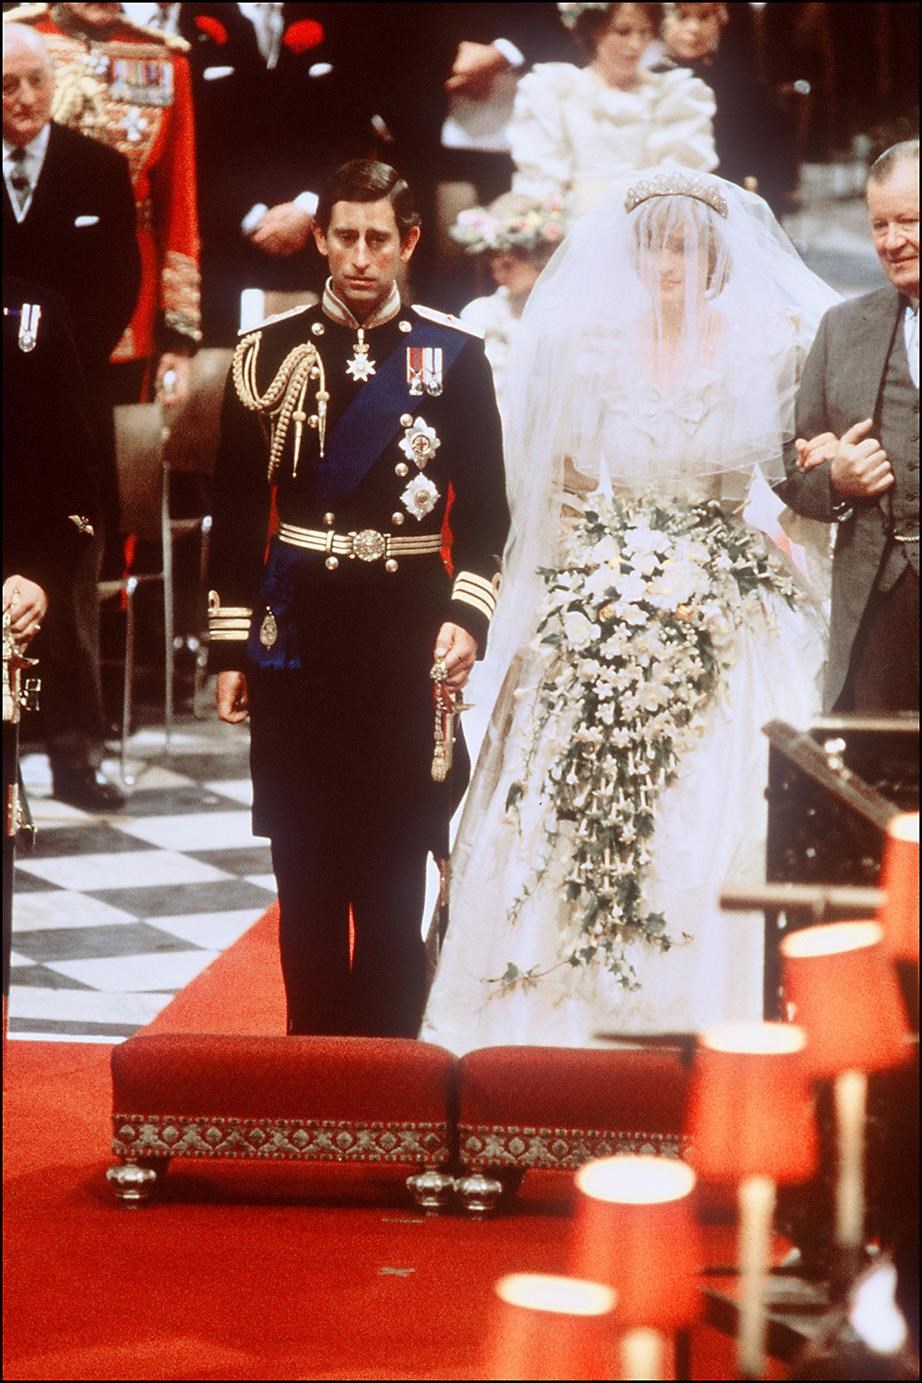 Prince Charles and Diana at the altar